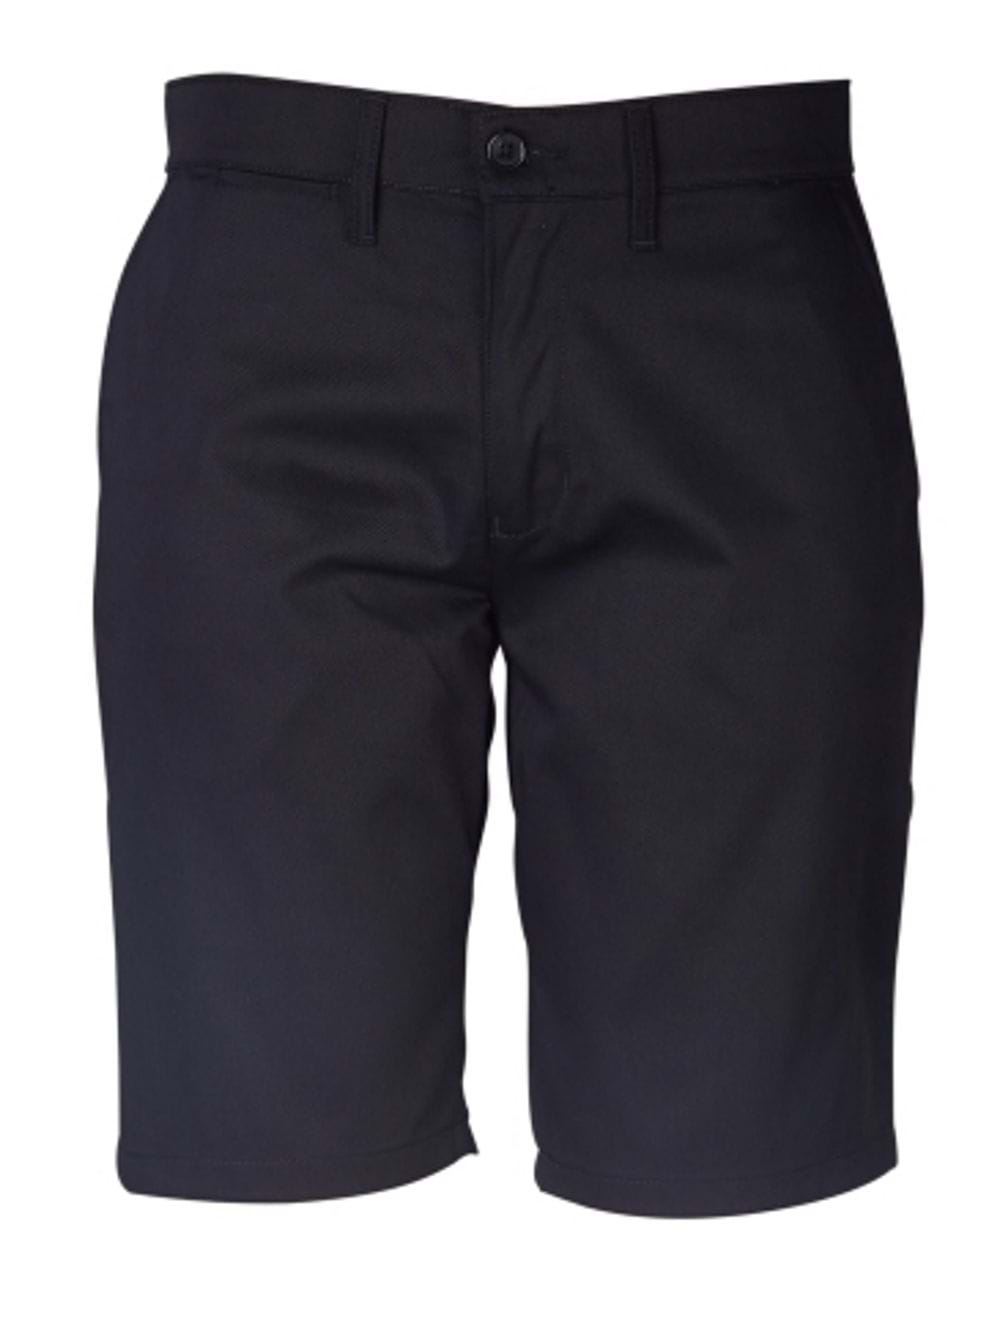 Westwood Bermuda Chino Shorts - Black / 42